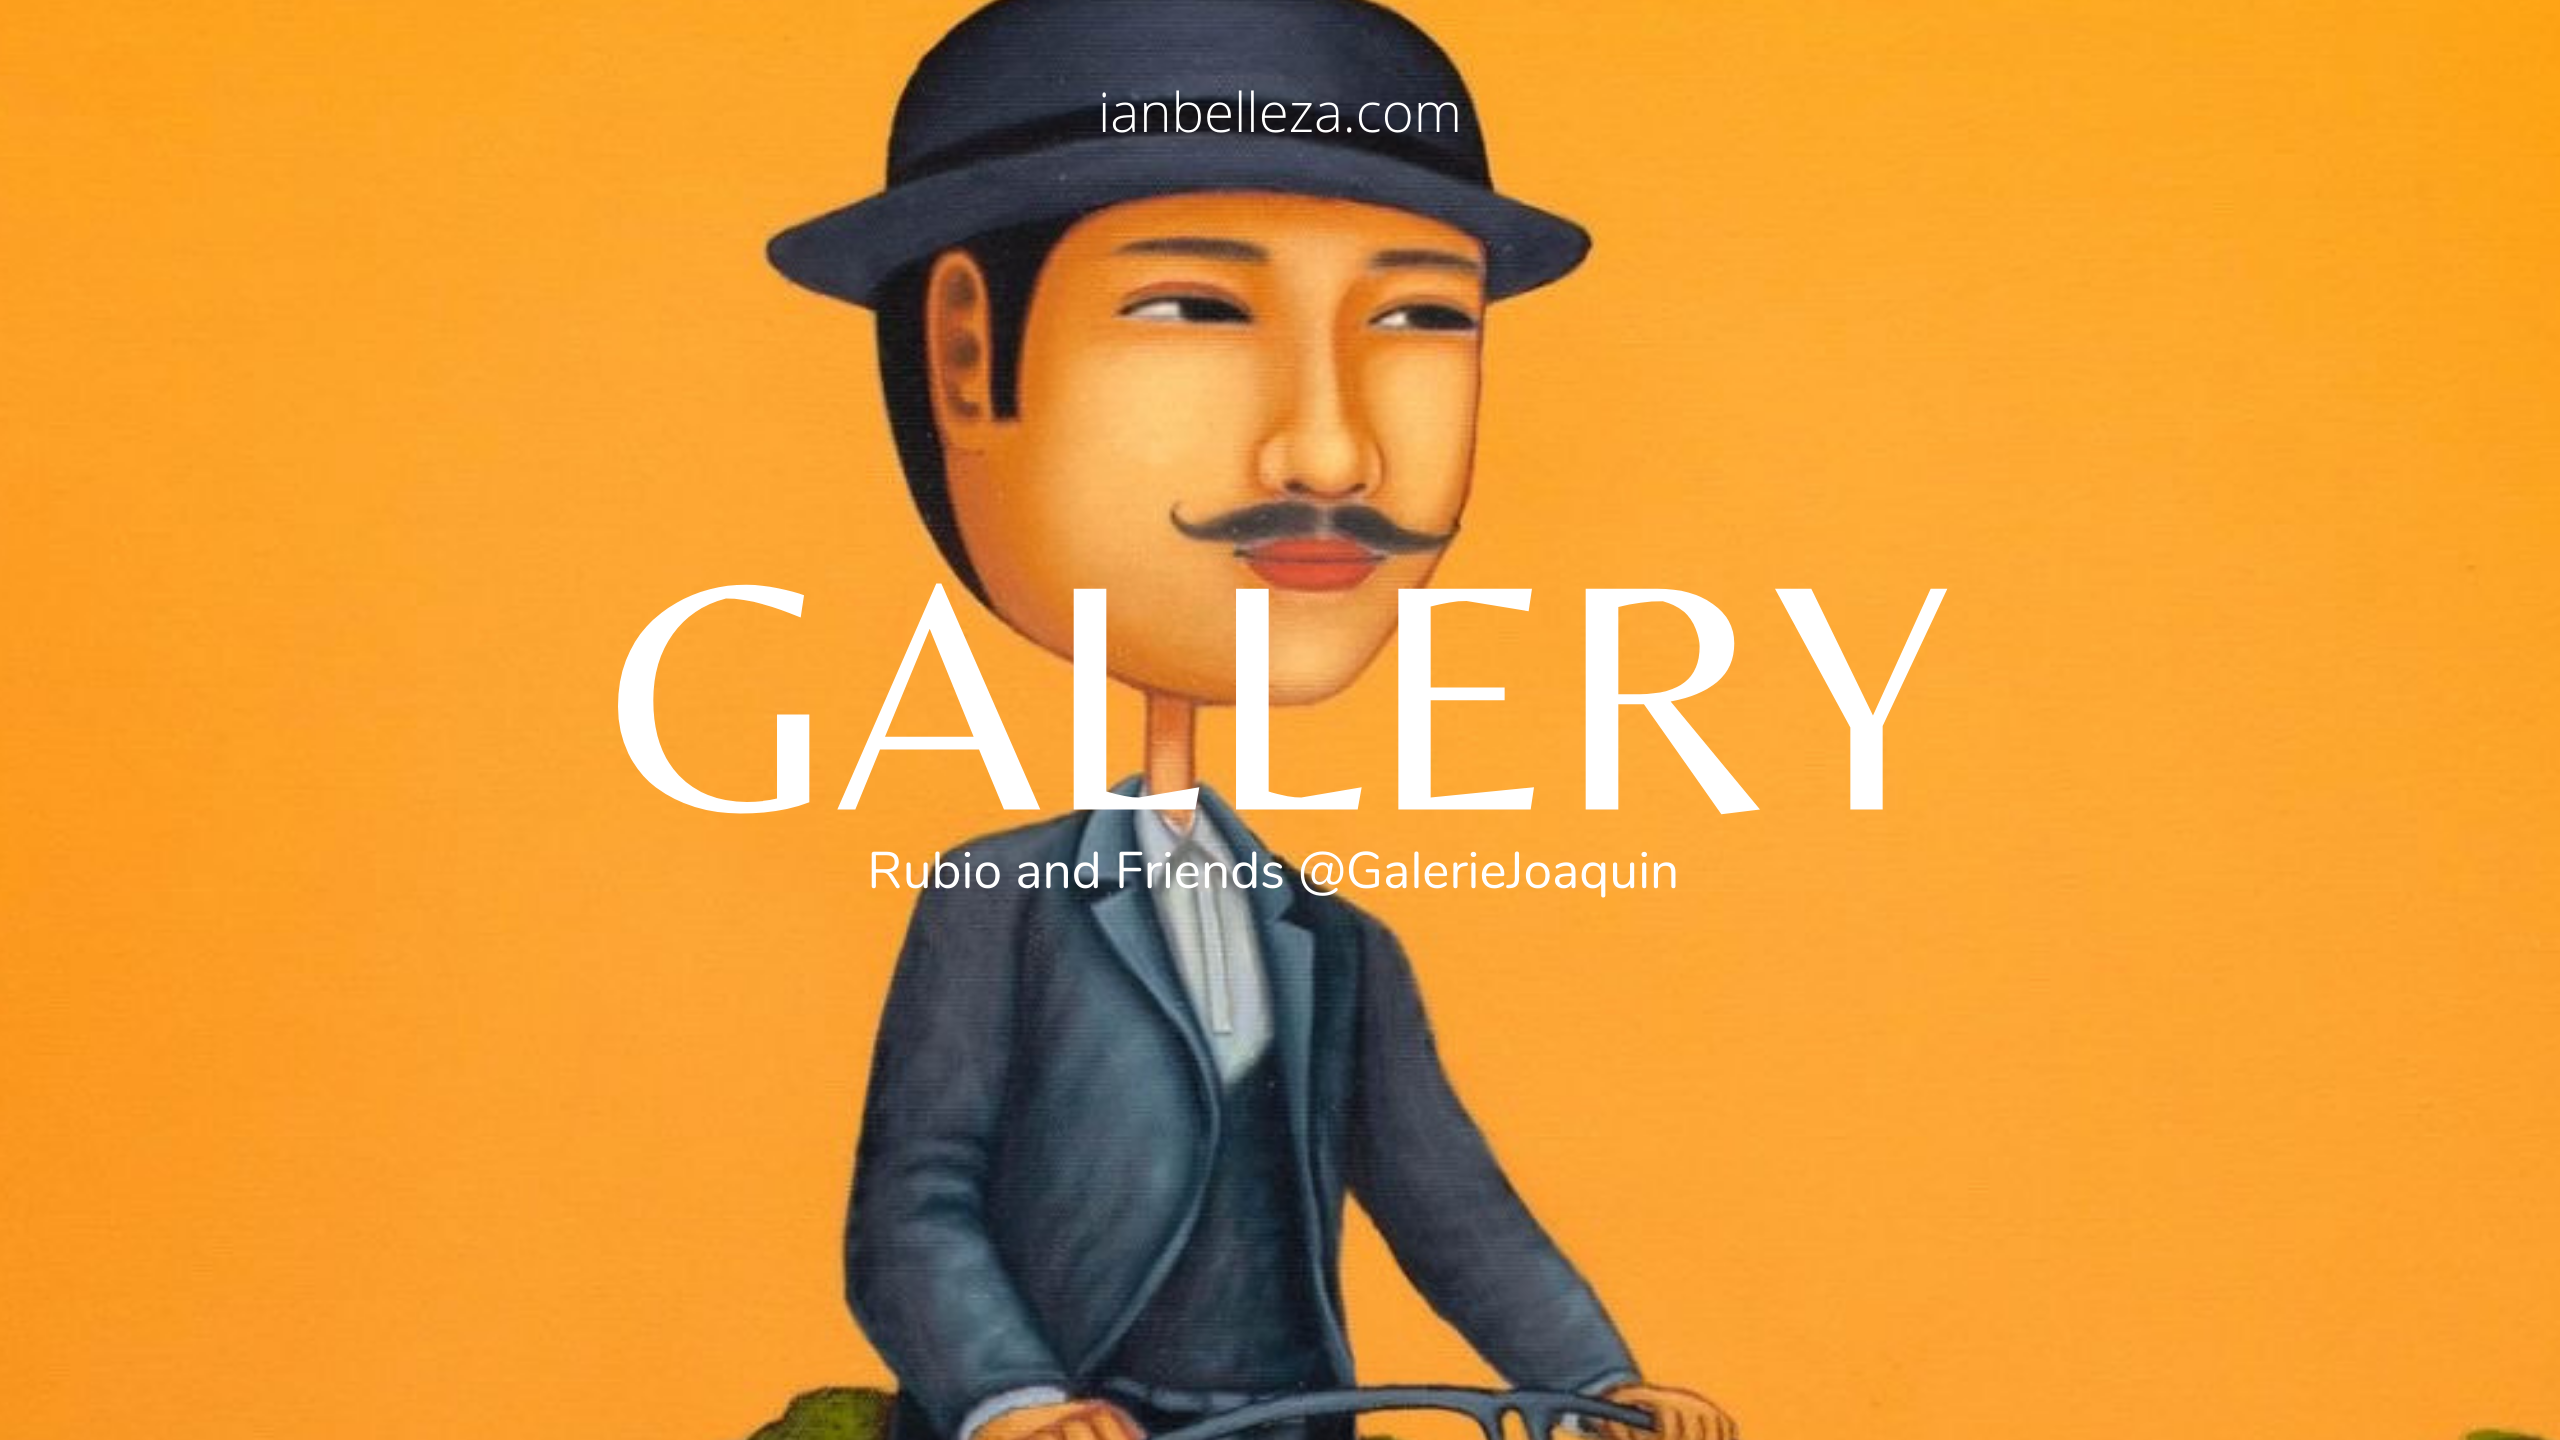 Gallery: Rubio and Friends @GalerieJoaquin